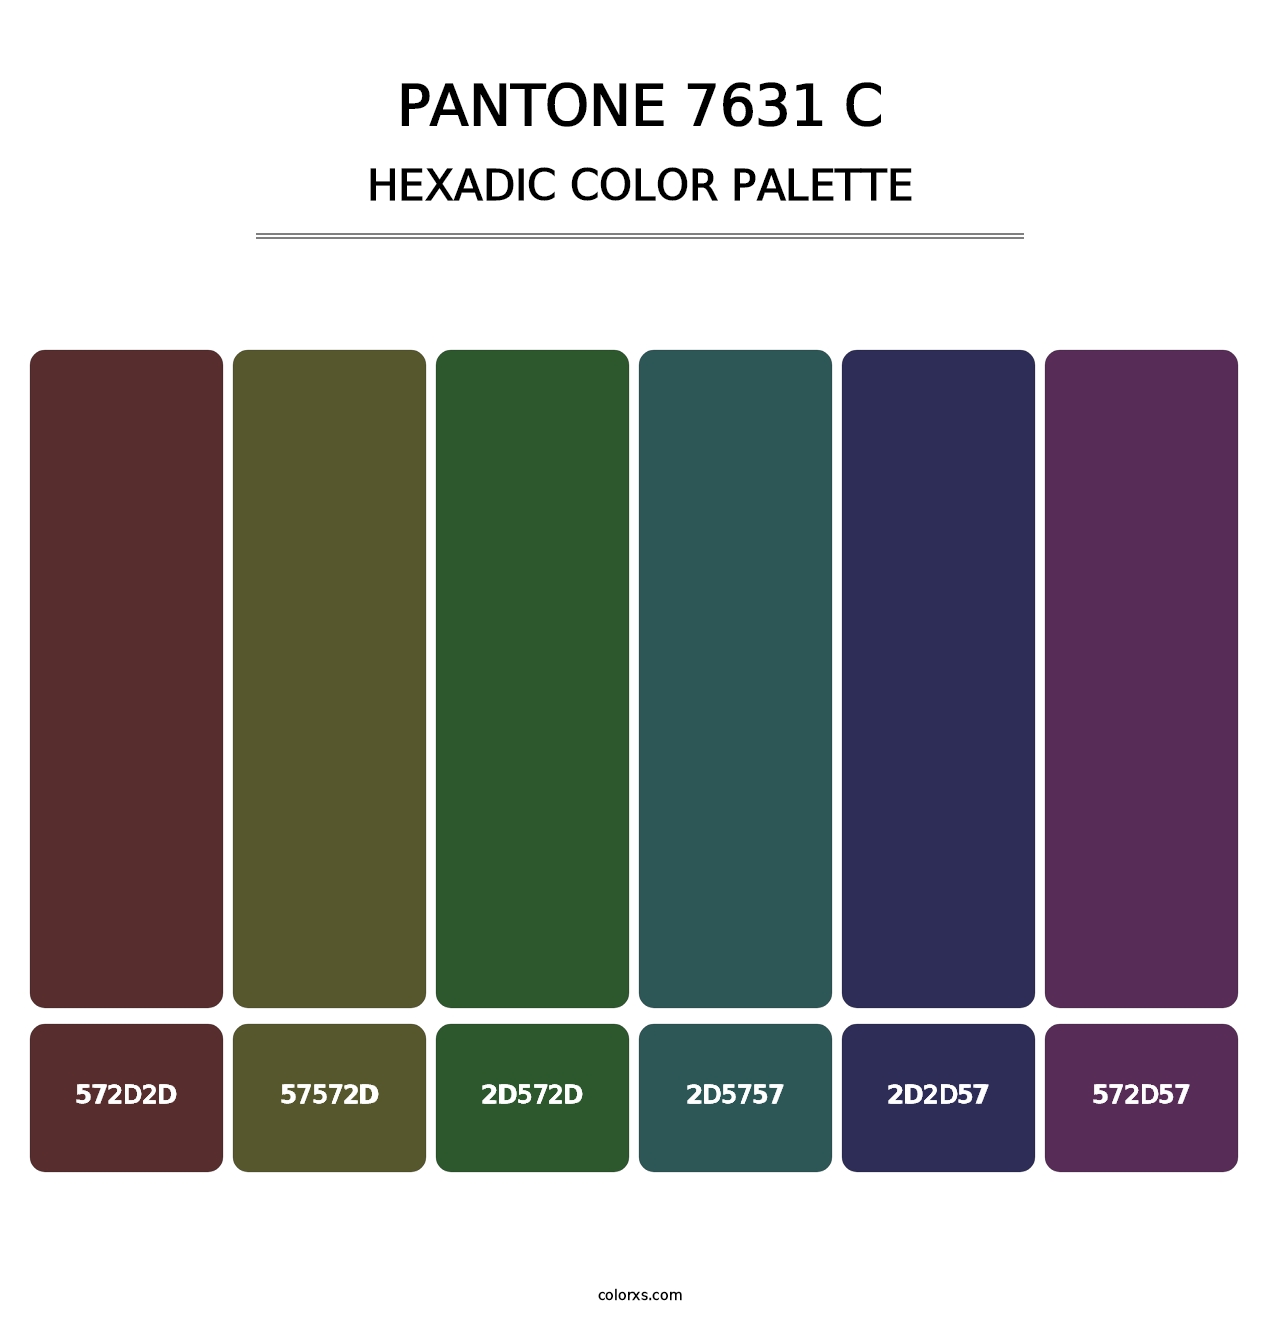 PANTONE 7631 C - Hexadic Color Palette